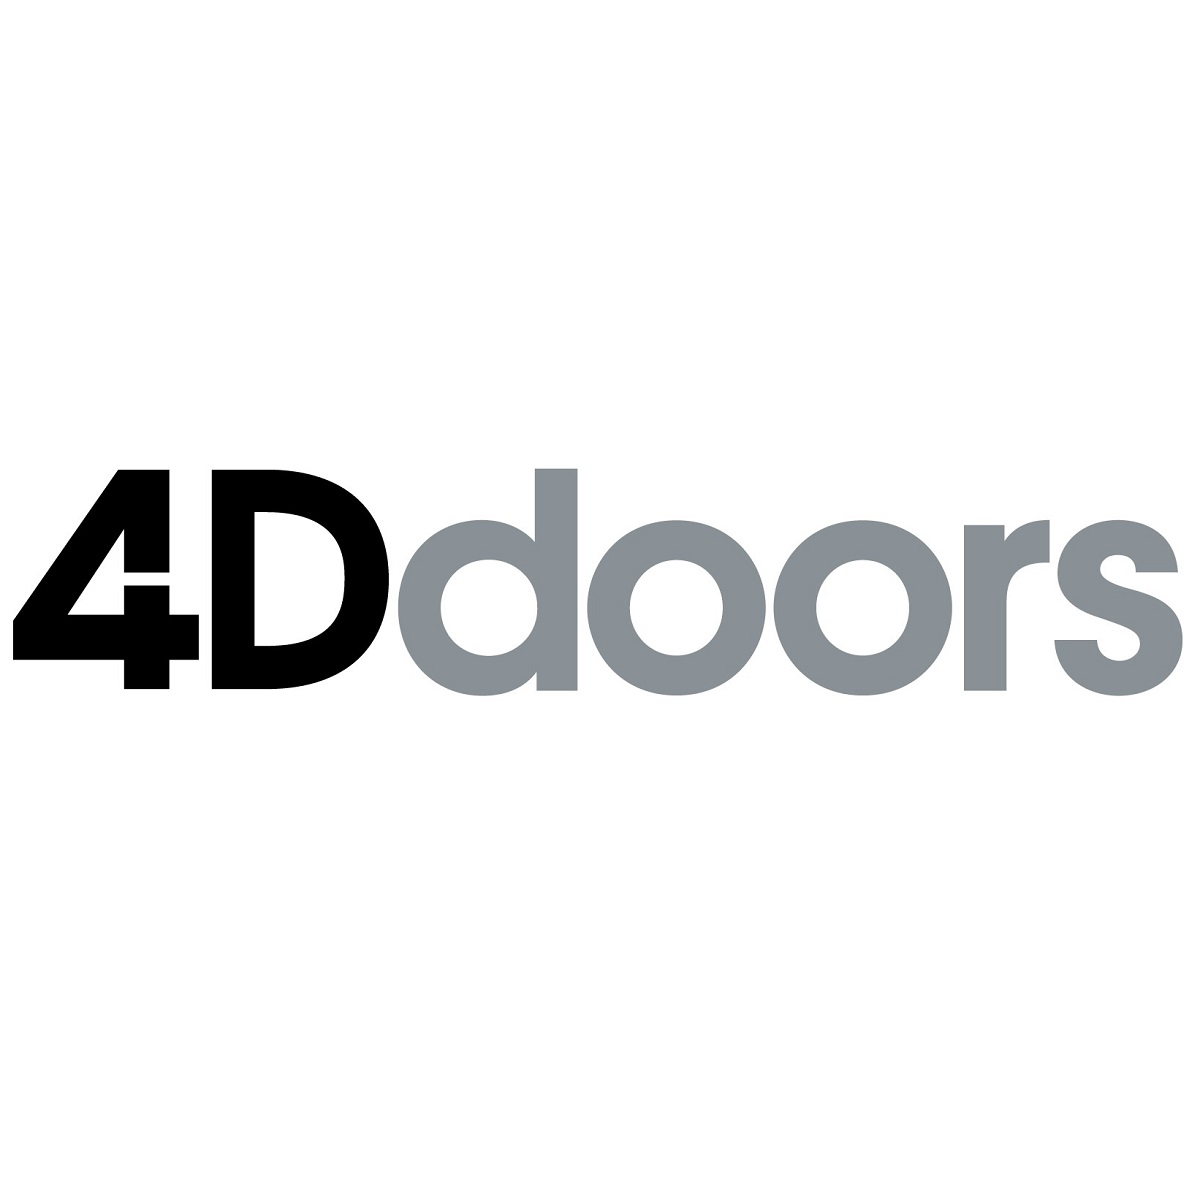 4Ddoors Renovation Supplies